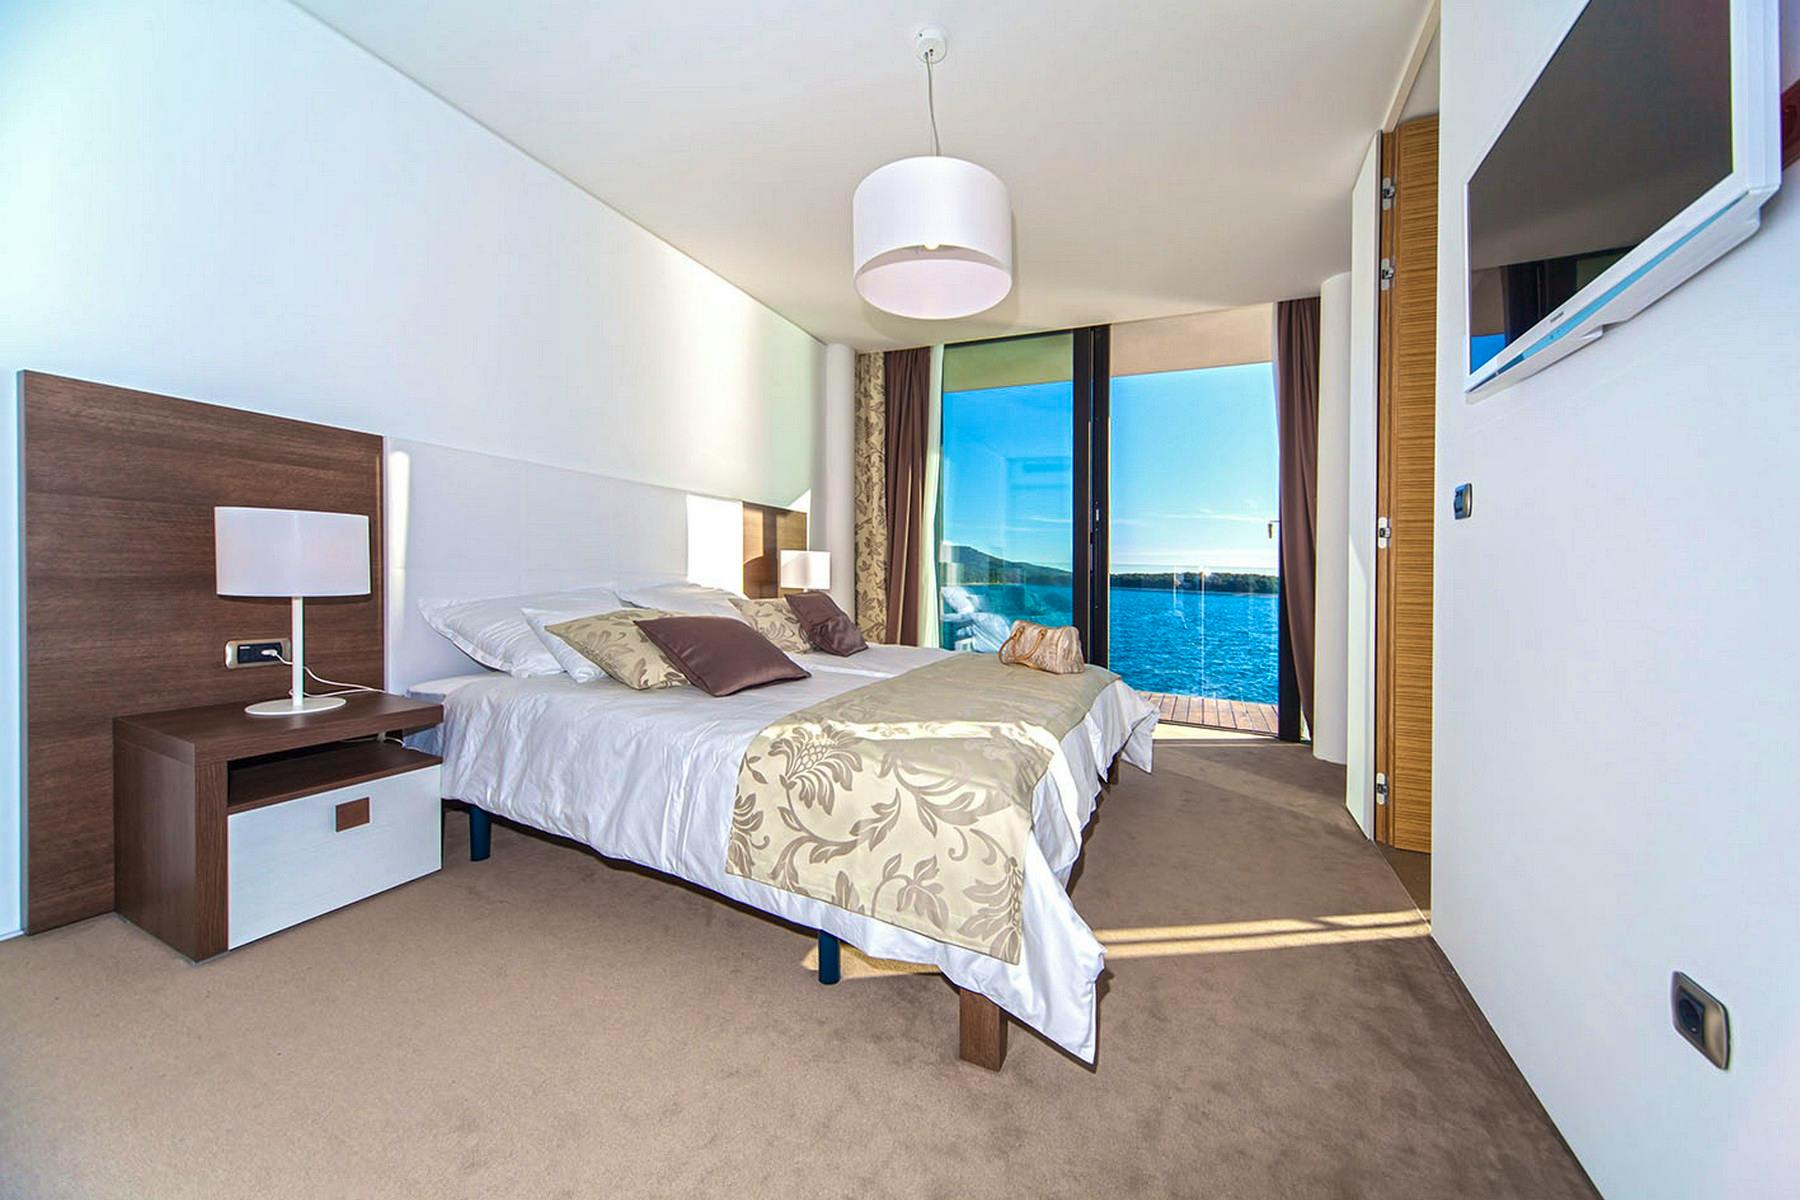 Luxurious en-suite bedroom with sea view